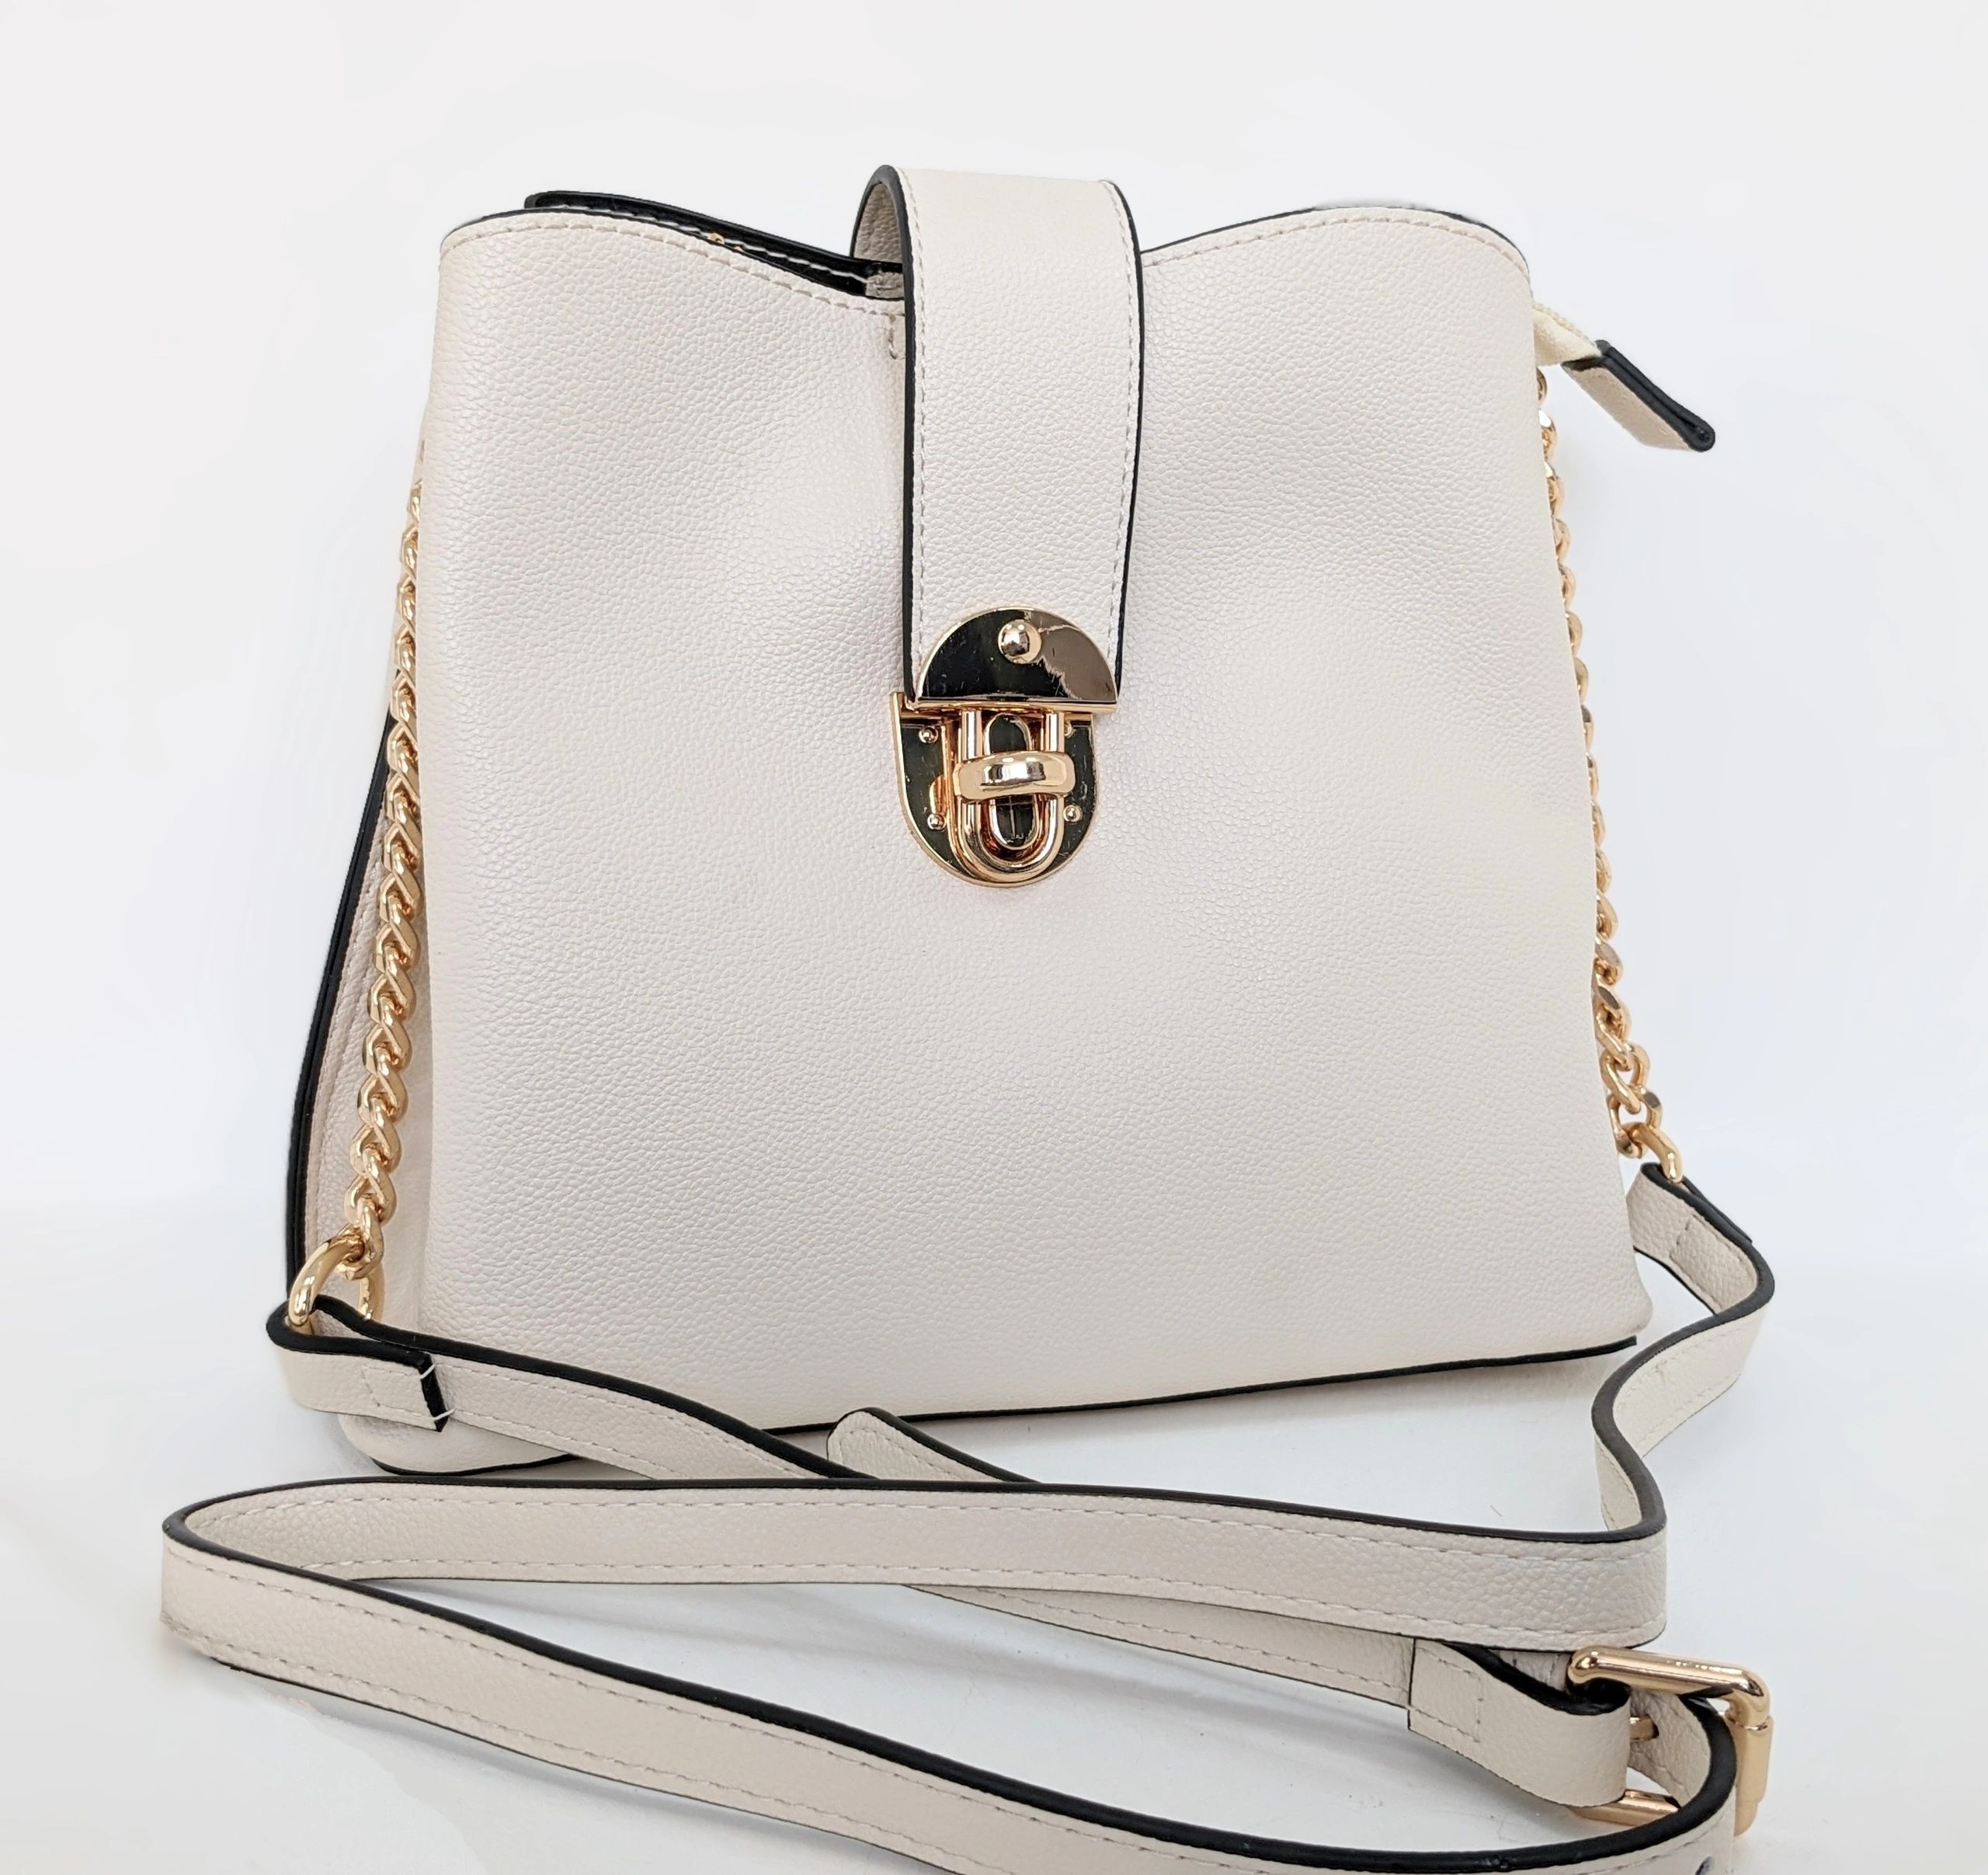 Halo Handbags - Fashion Bags, Bags Online, Bag Accessories